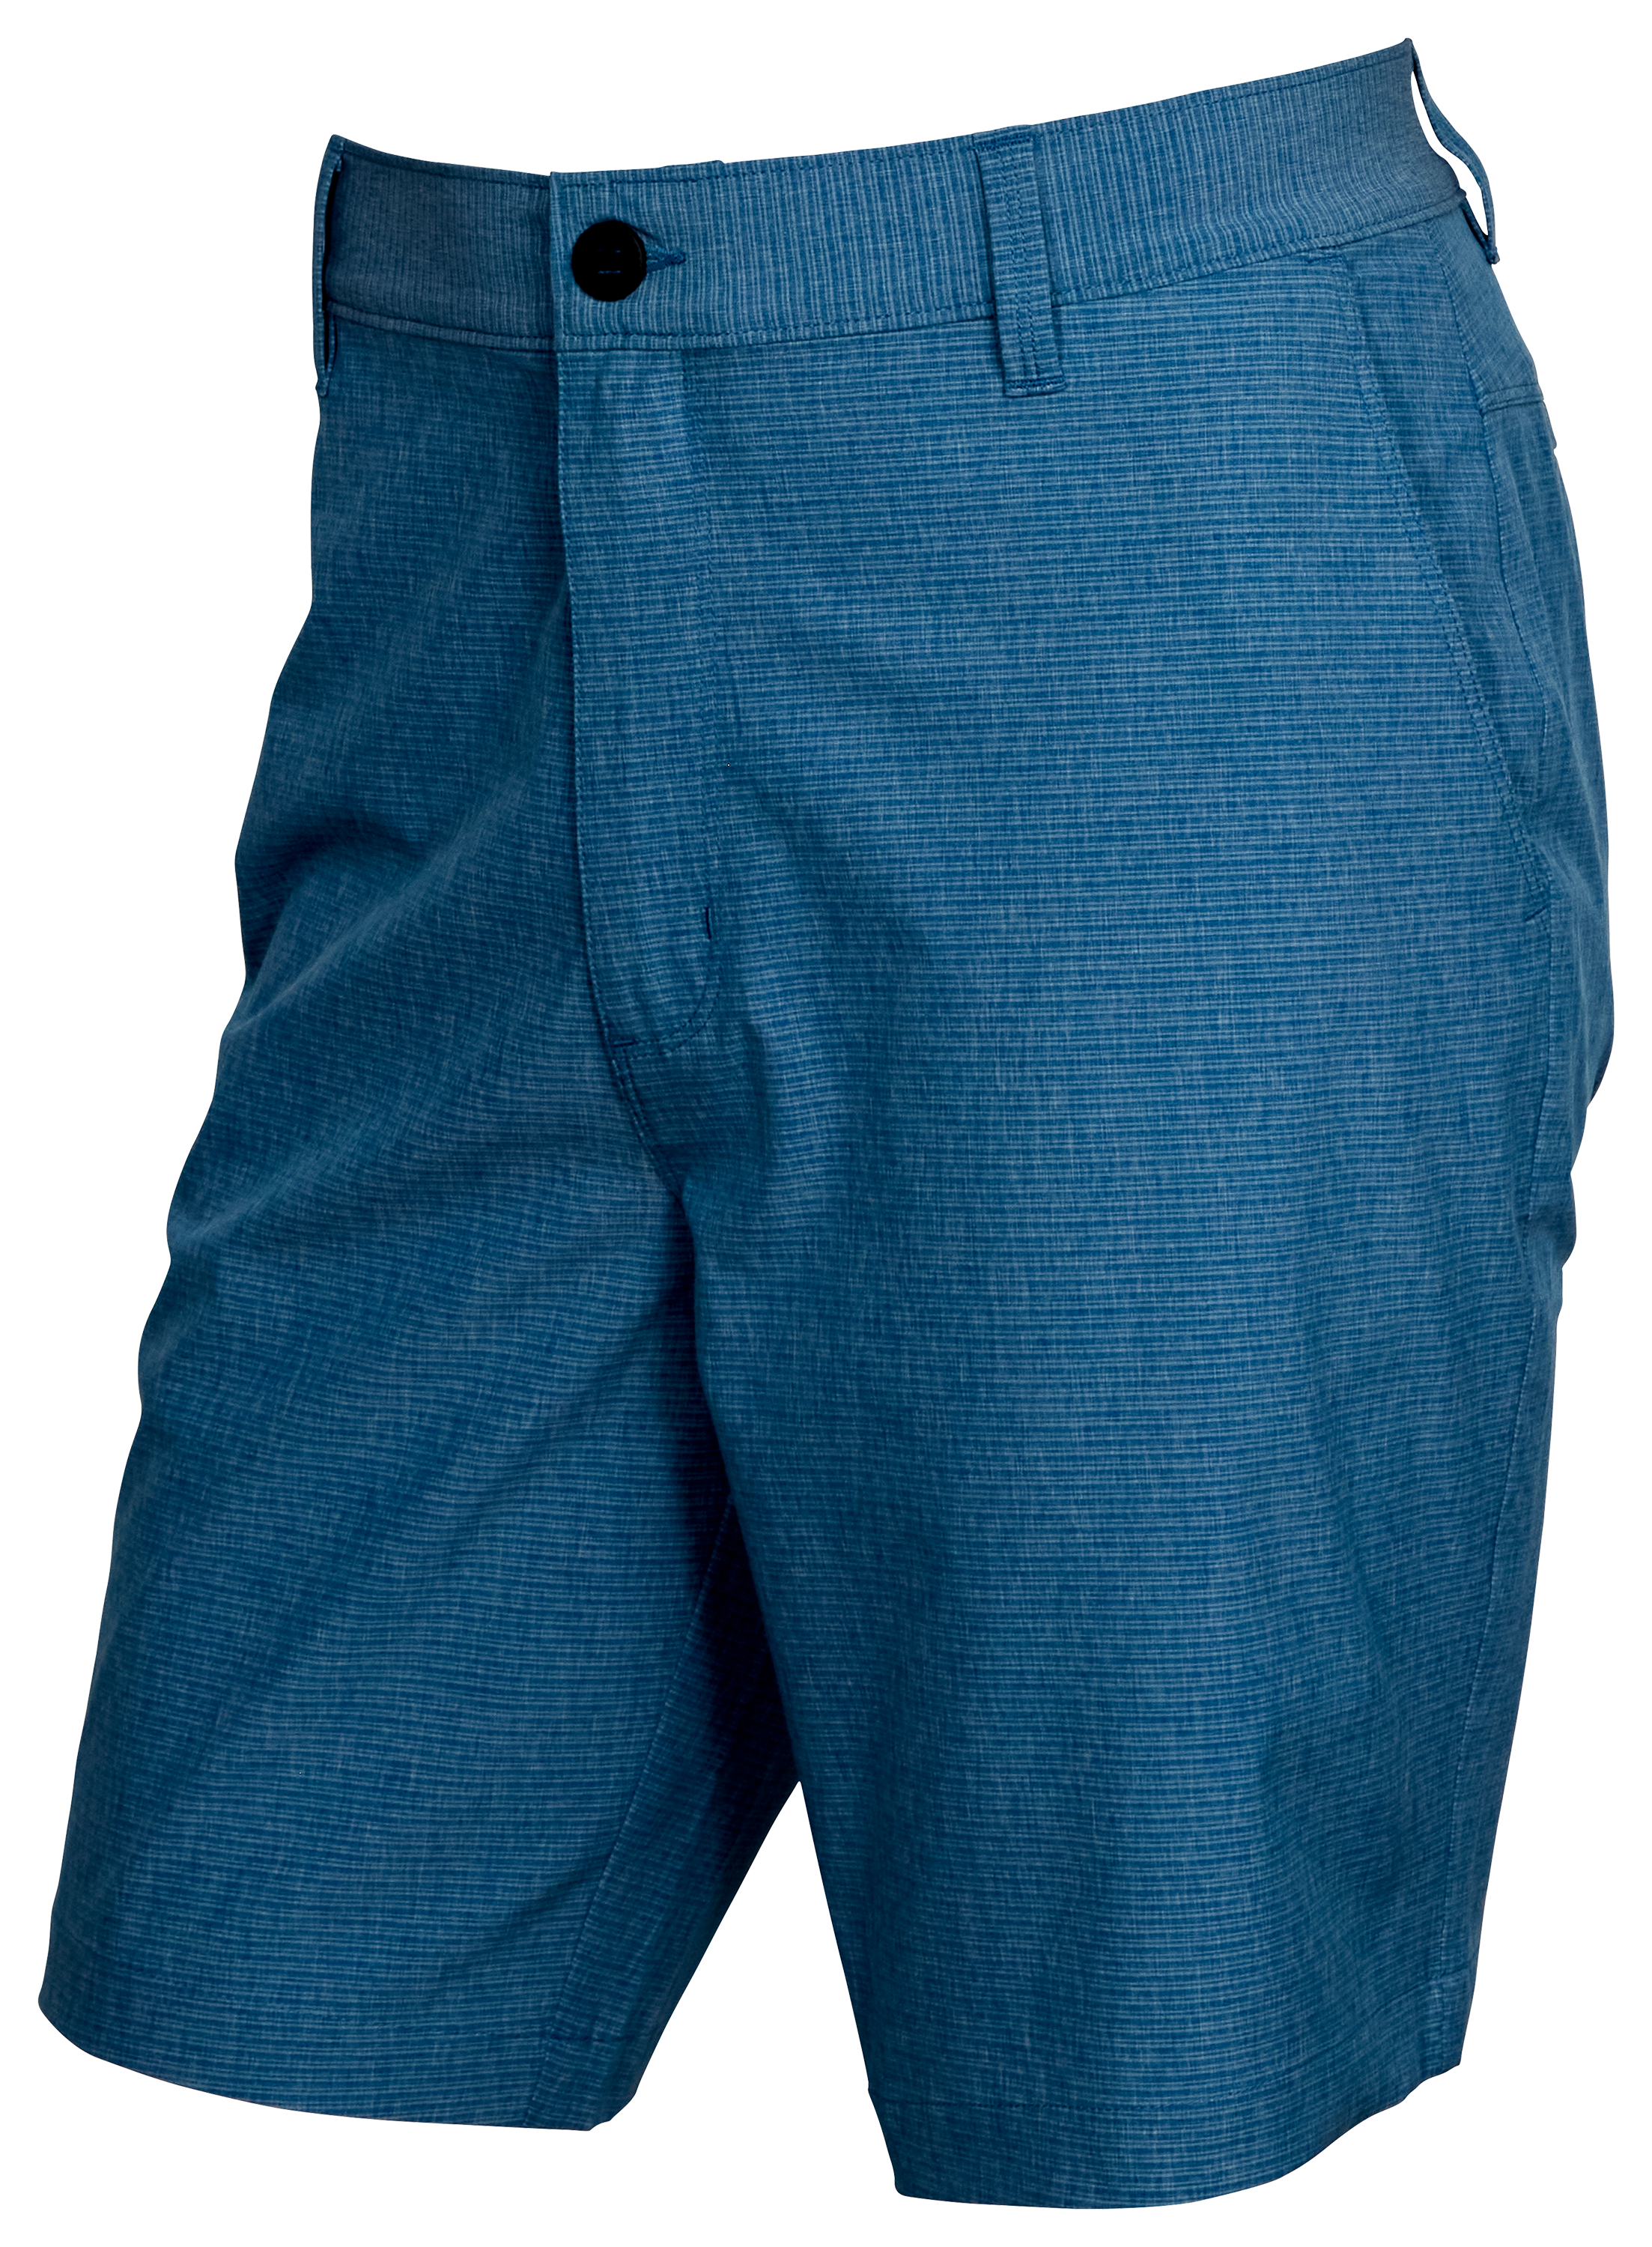 World Wide Sportsman Pescador Stretch Fishing Shorts for Men - Vallarta Blue Stripe - 34